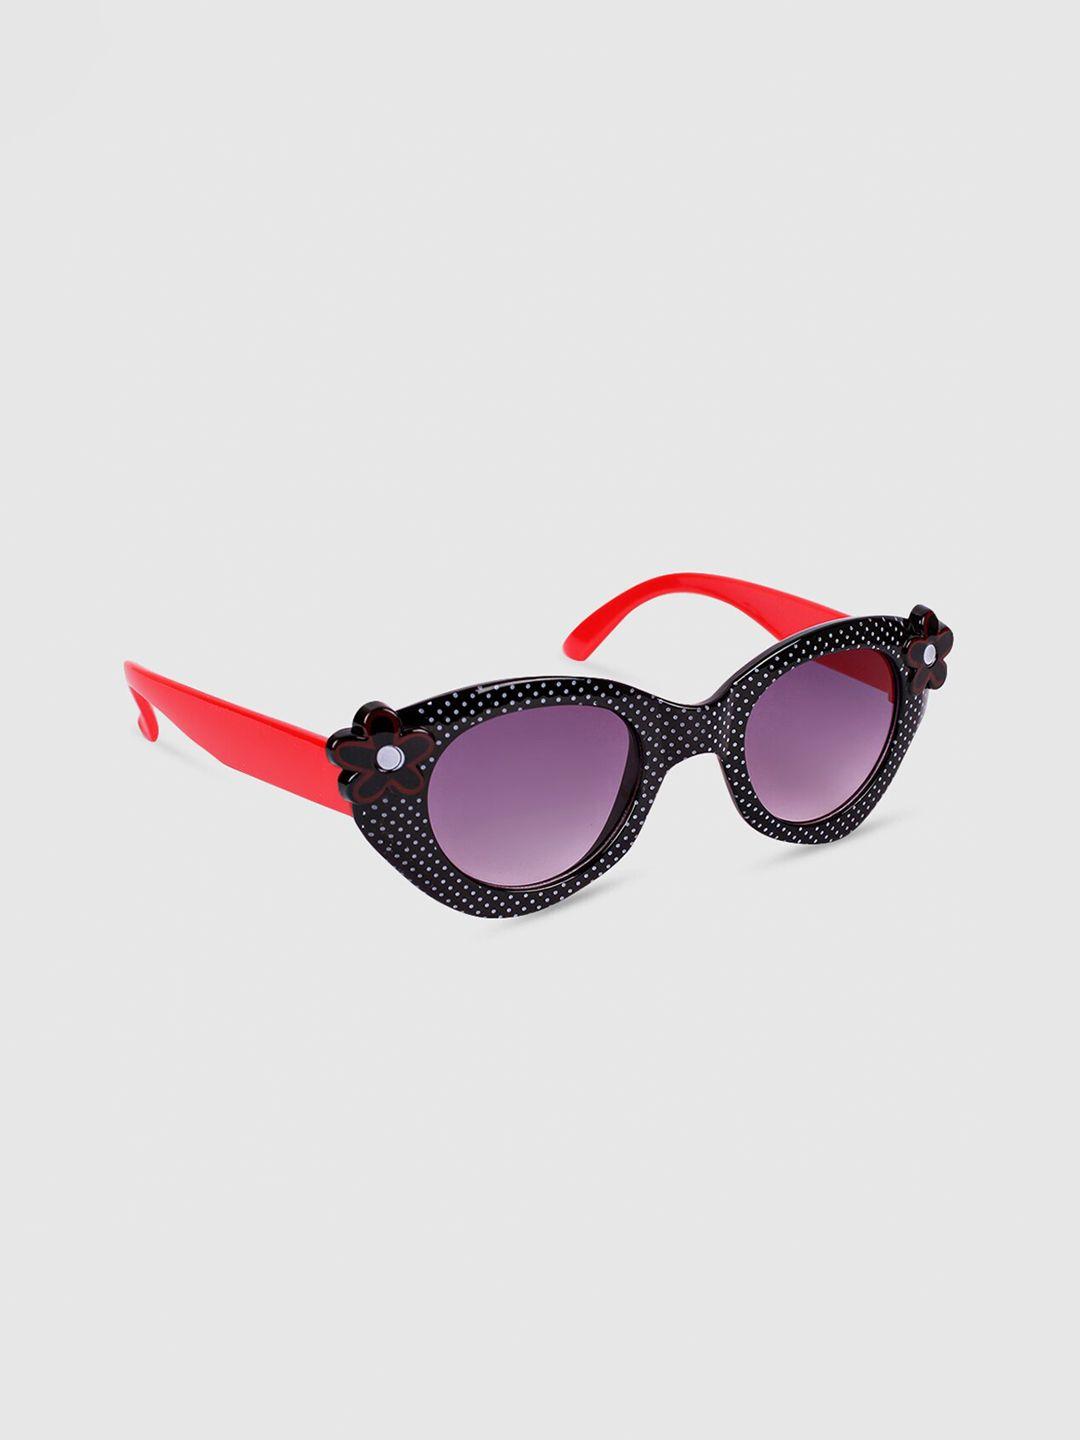 DukieKooky Girls Wayfarer Sunglasses with UV Protected Lens - DKSG349B-Grey